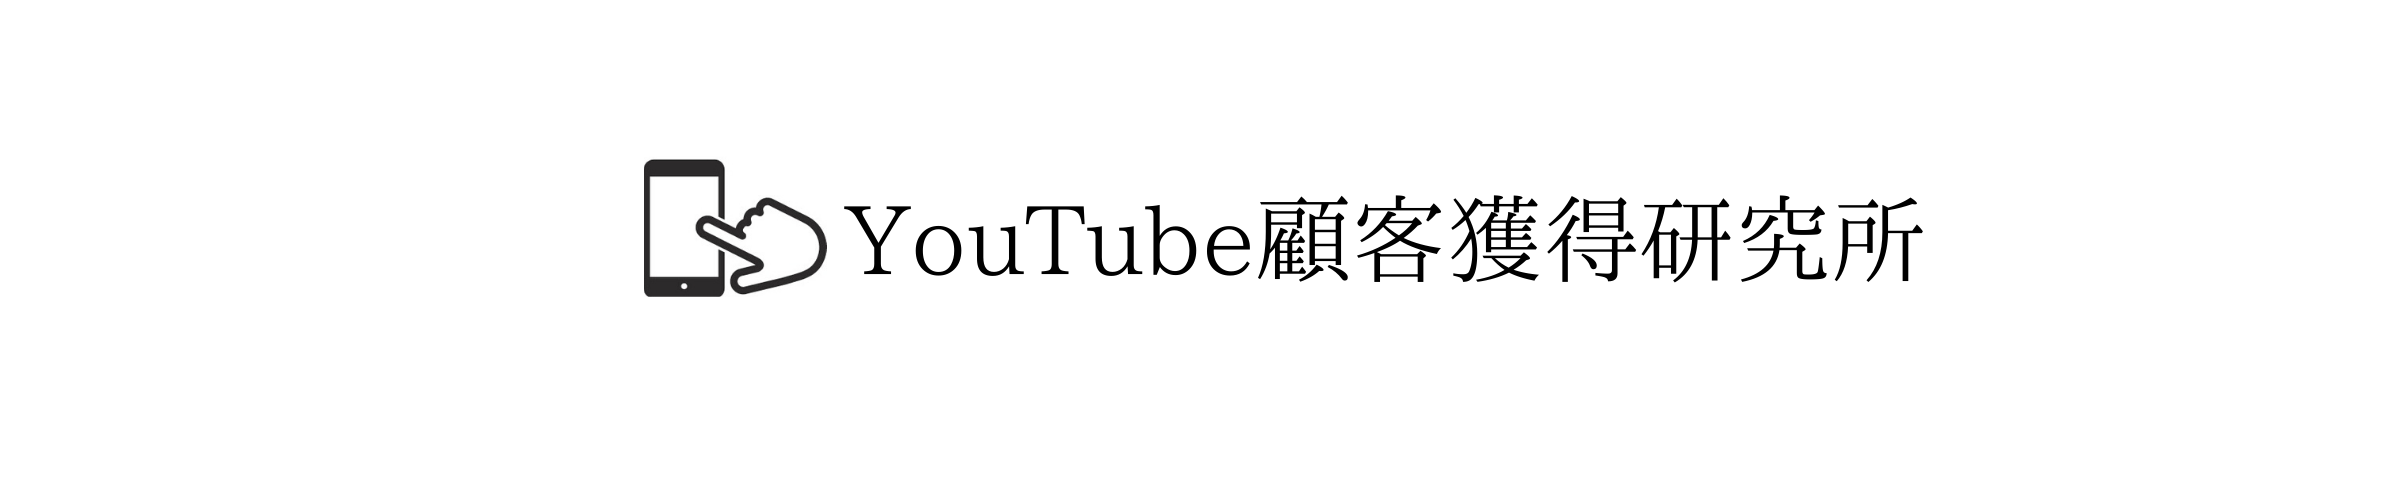 Youtubeアドセンスで稼ぎたいなら音声読み上げソフトはやめた方がいい Youtube顧客獲得研究所